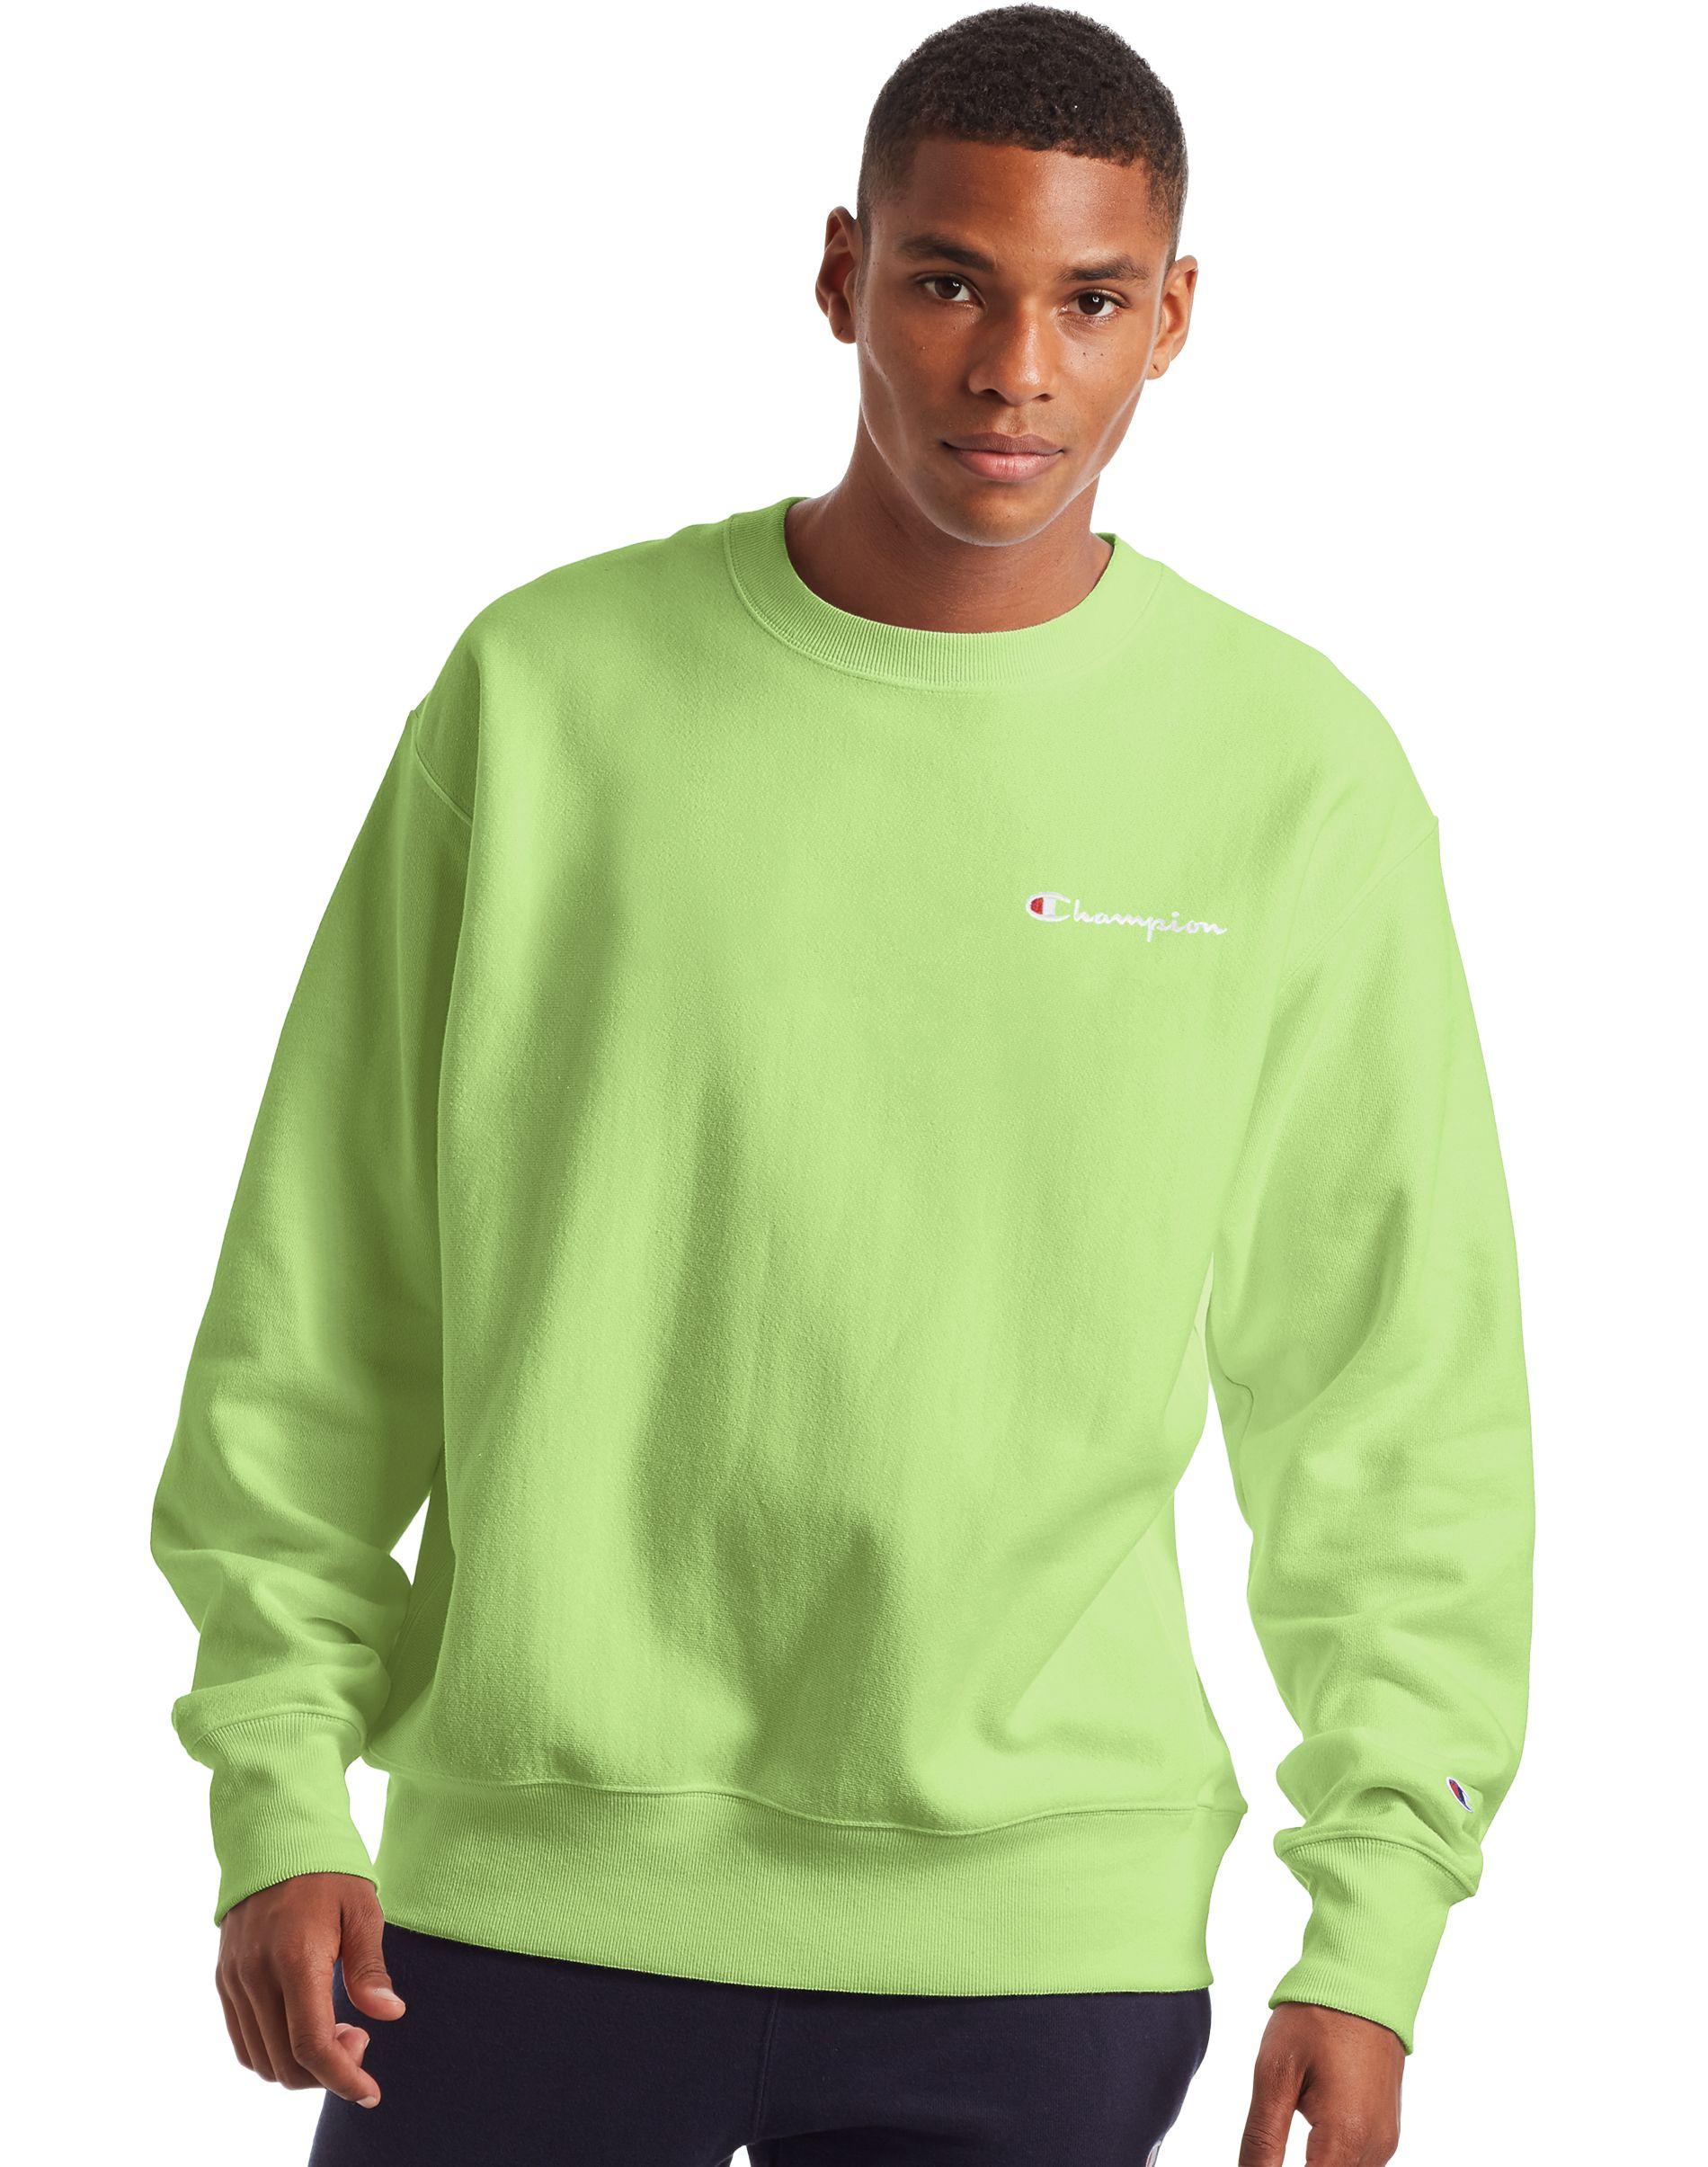 light green champion sweatshirt